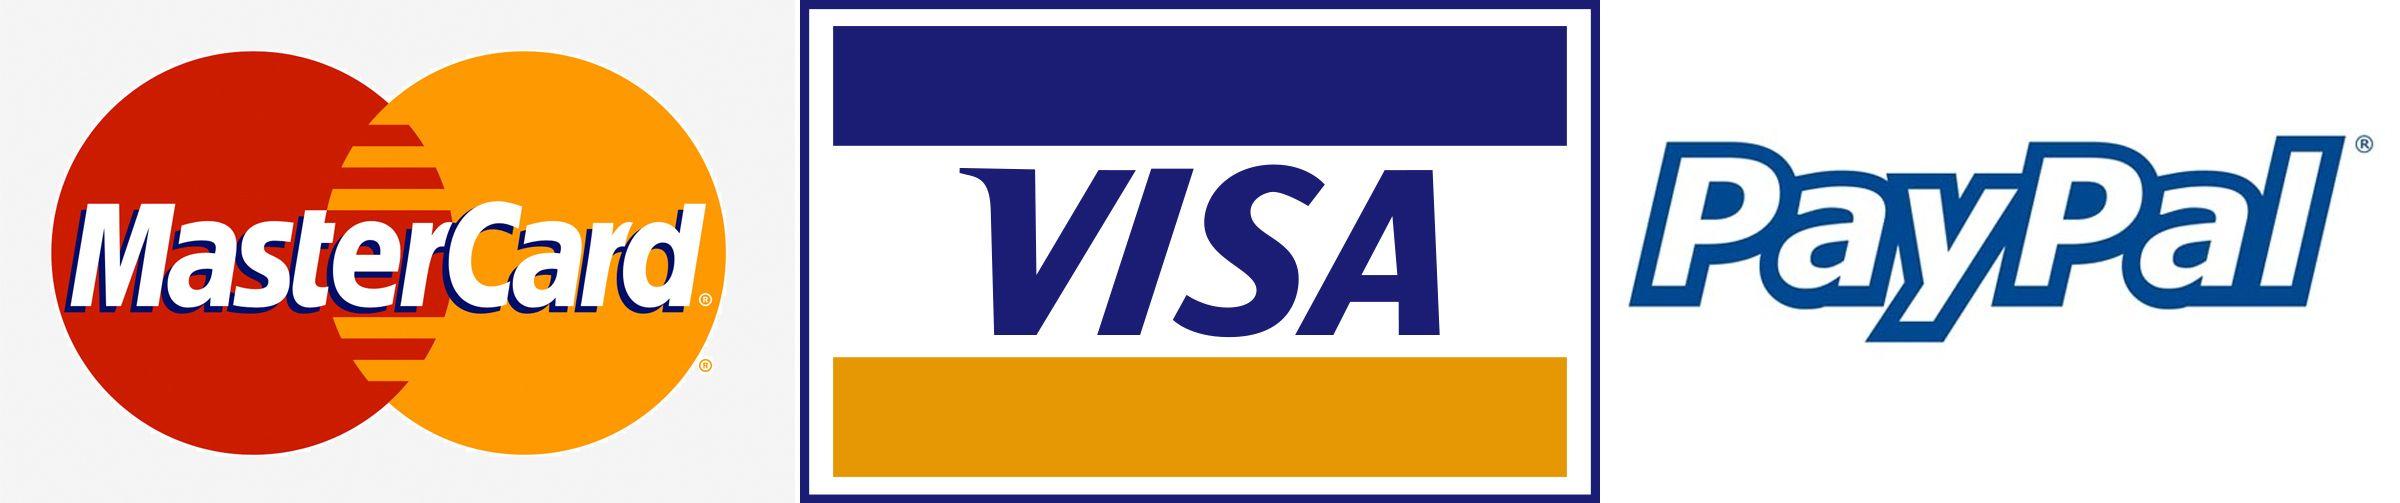 PayPal Visa MasterCard Logo - Make your reservations and bookings with Paypal – VISA – Mastercard ...